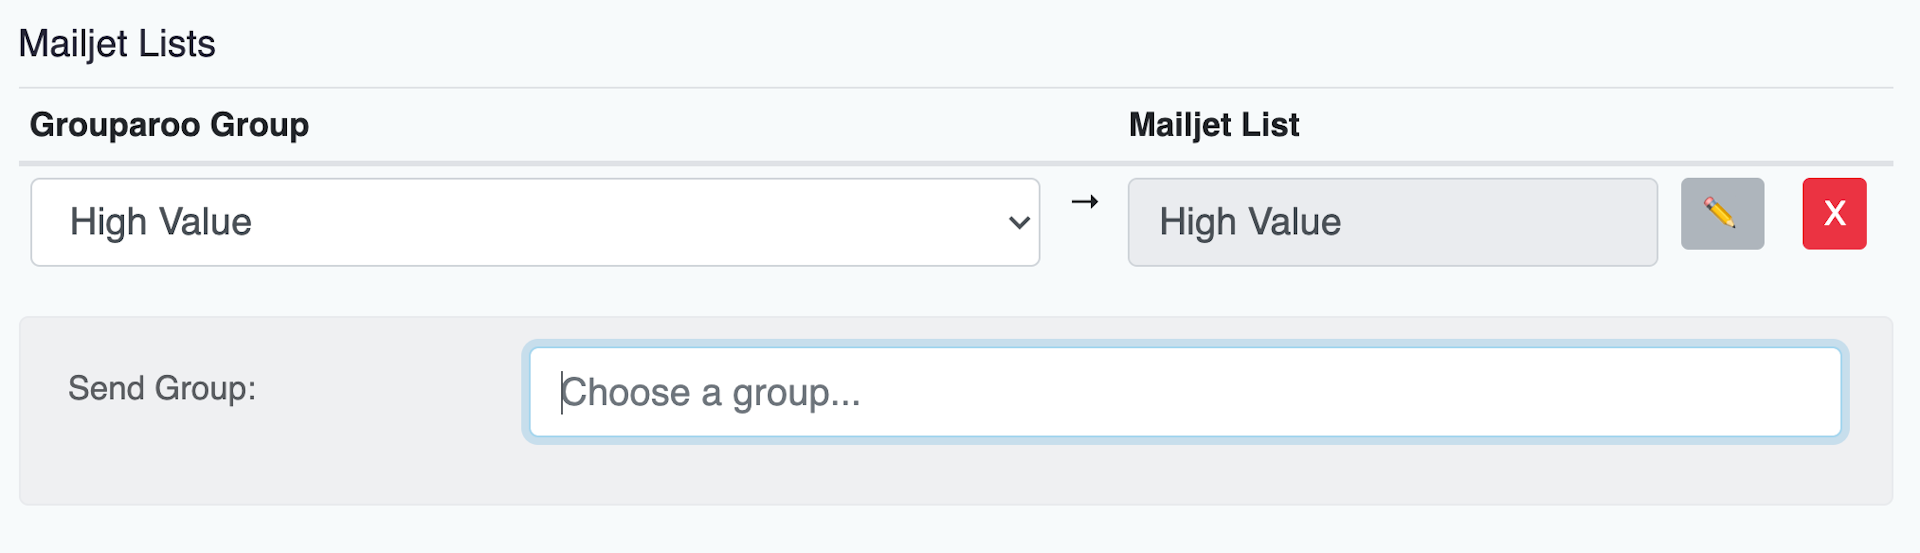 Mailjet Group Data